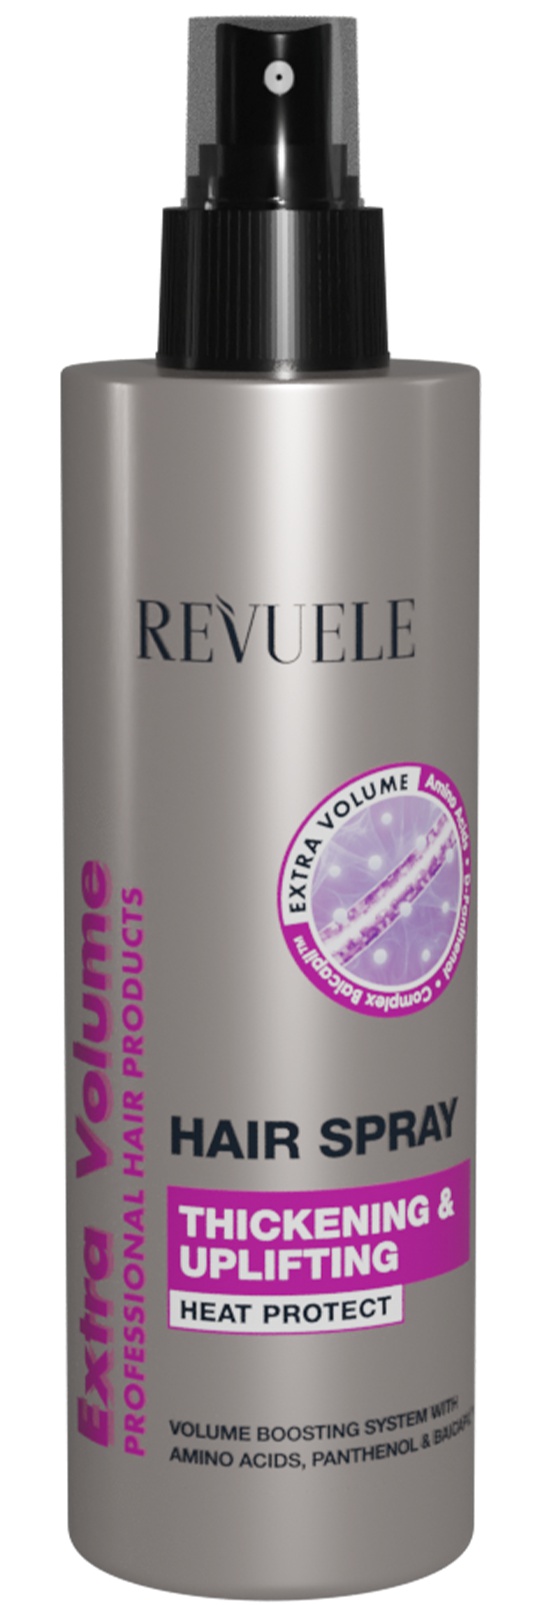 Revuele Extra Volume Hair Spray